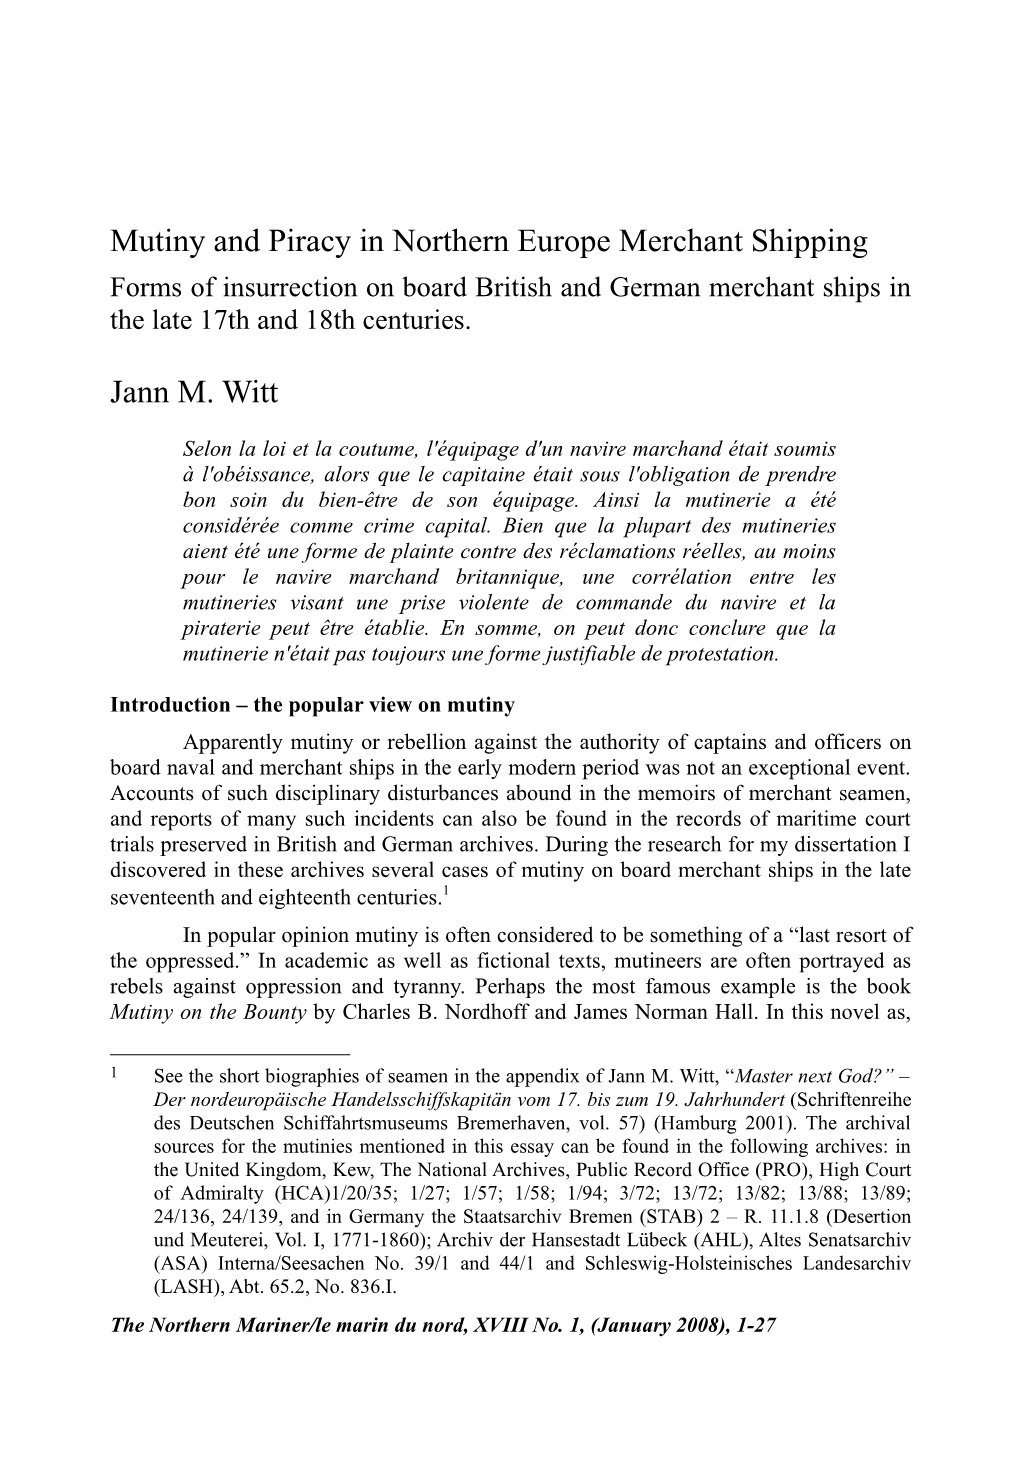 Mutiny and Piracy in Northern Europe Merchant Shipping Jann M. Witt